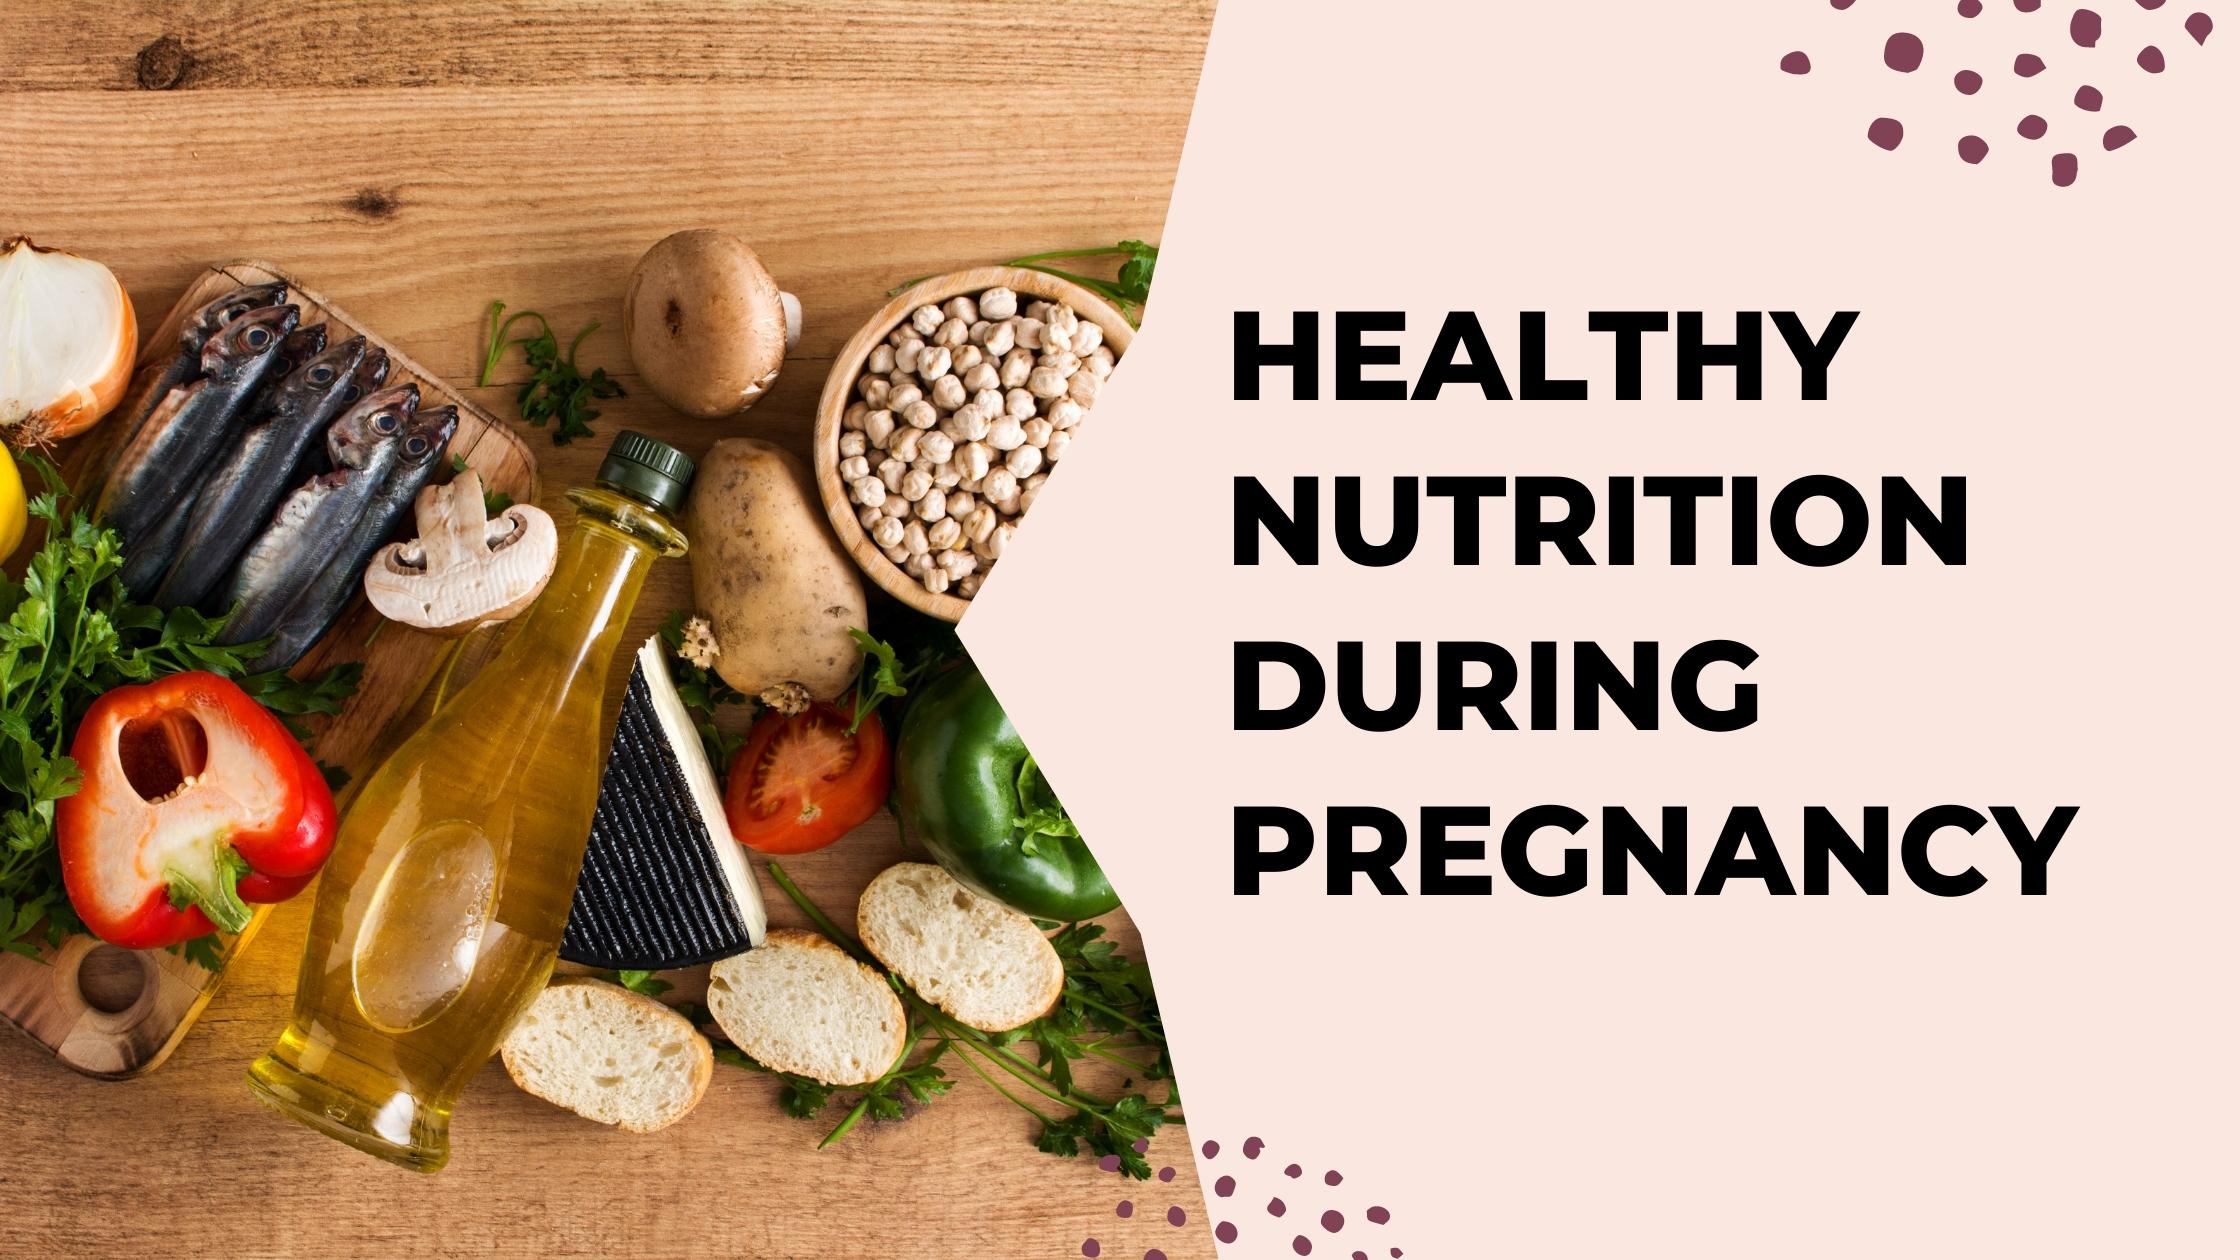 Helathy Nutrition During Pregnancy